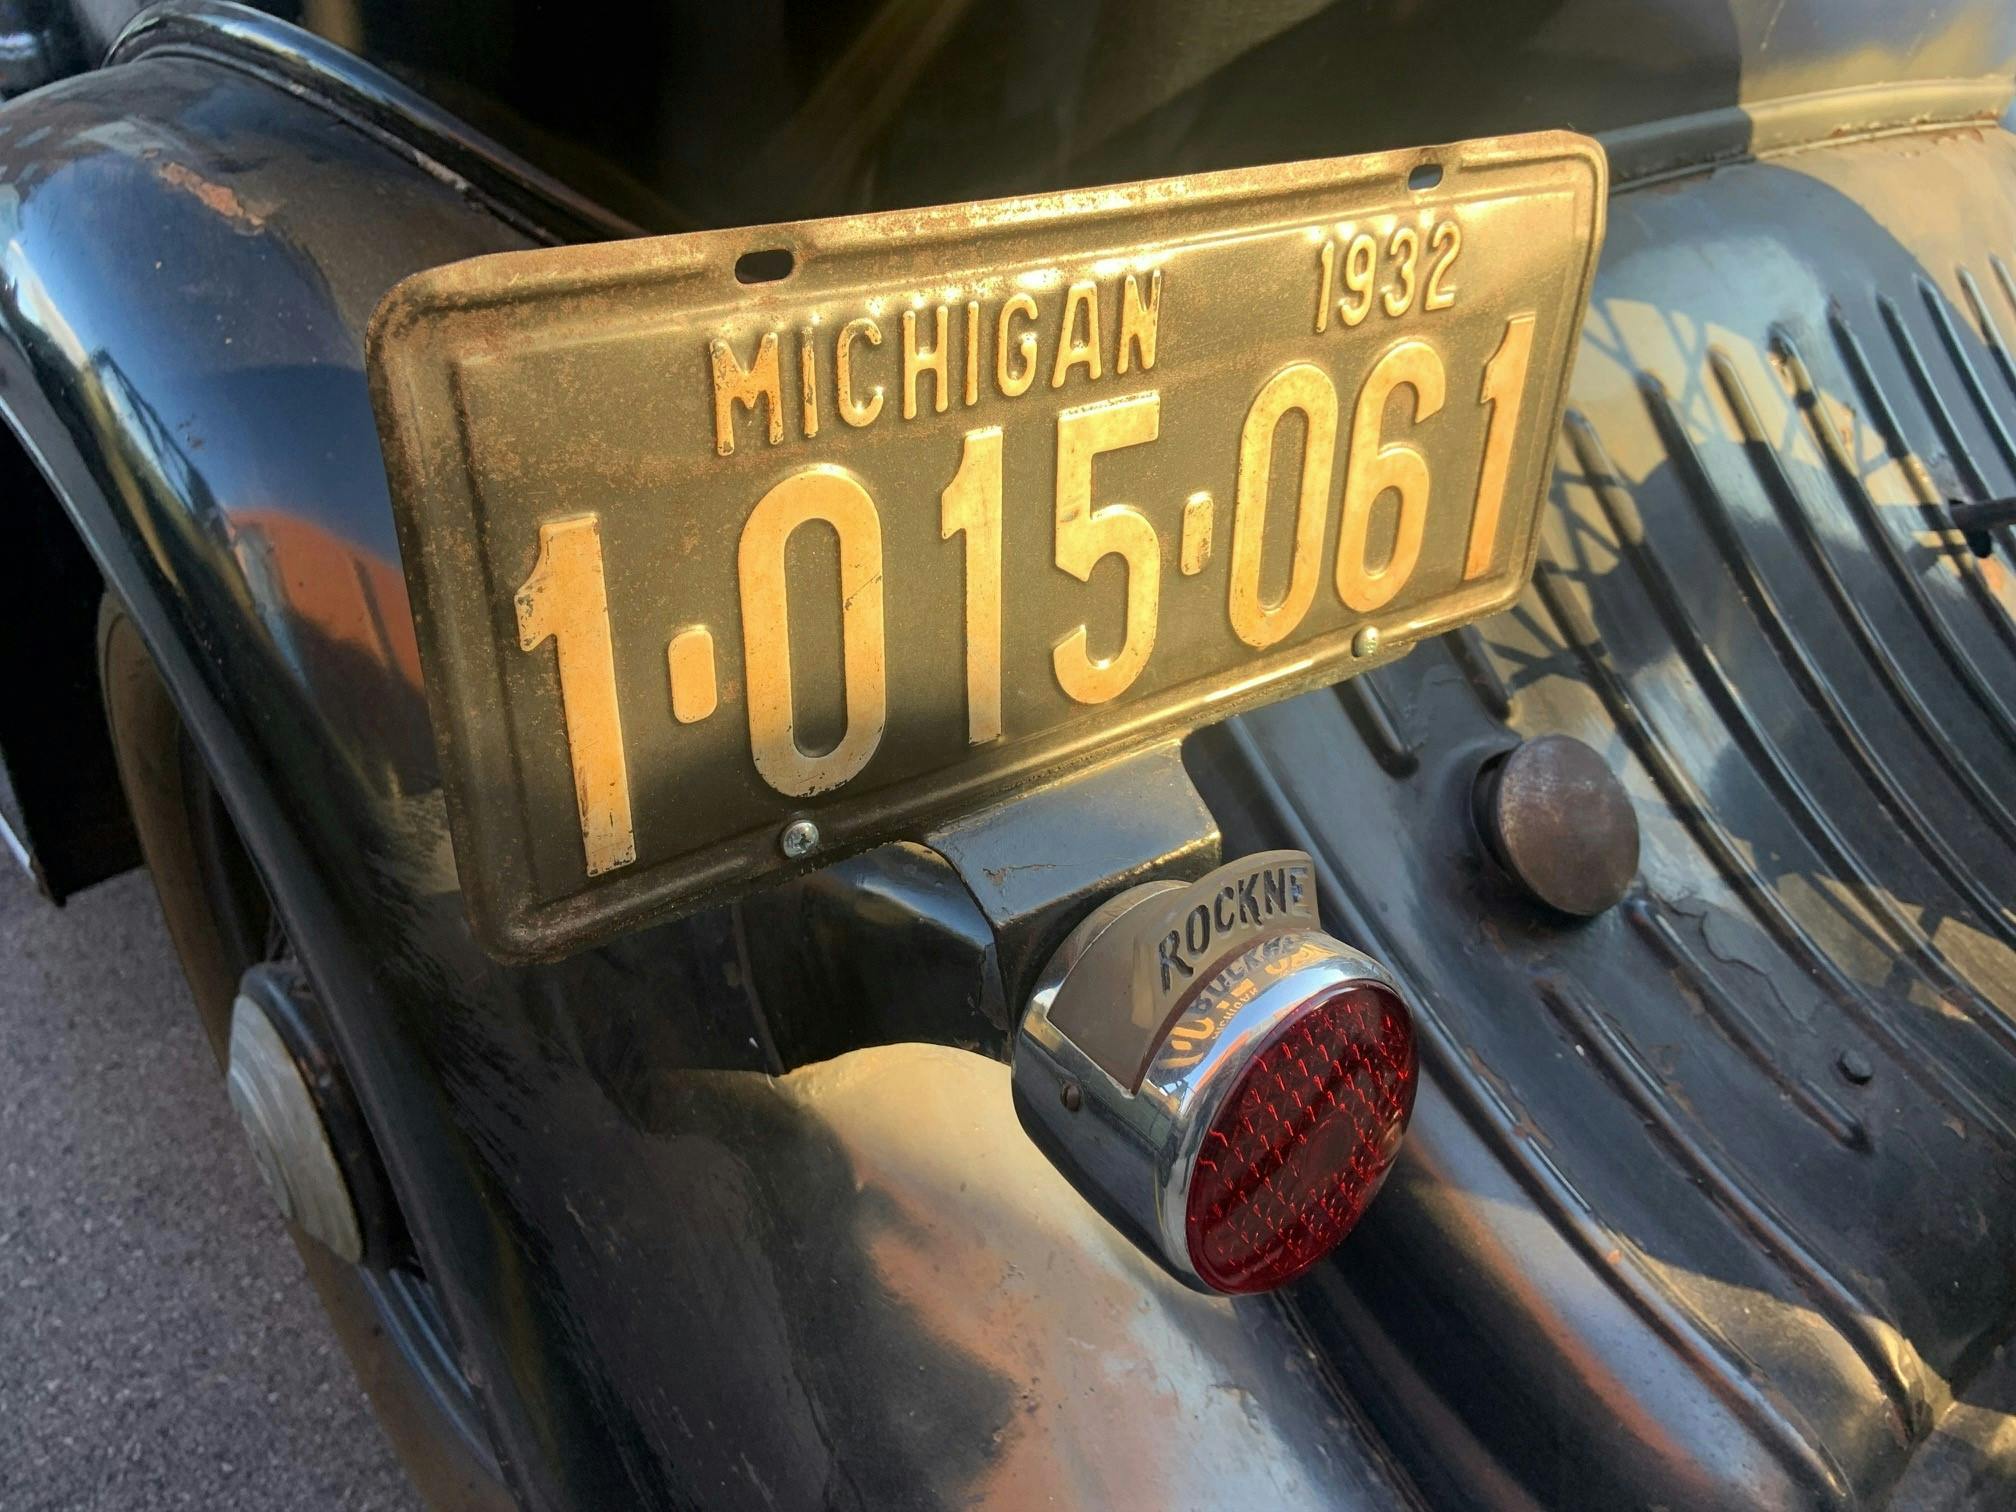 1932 Rockne - rear license plate